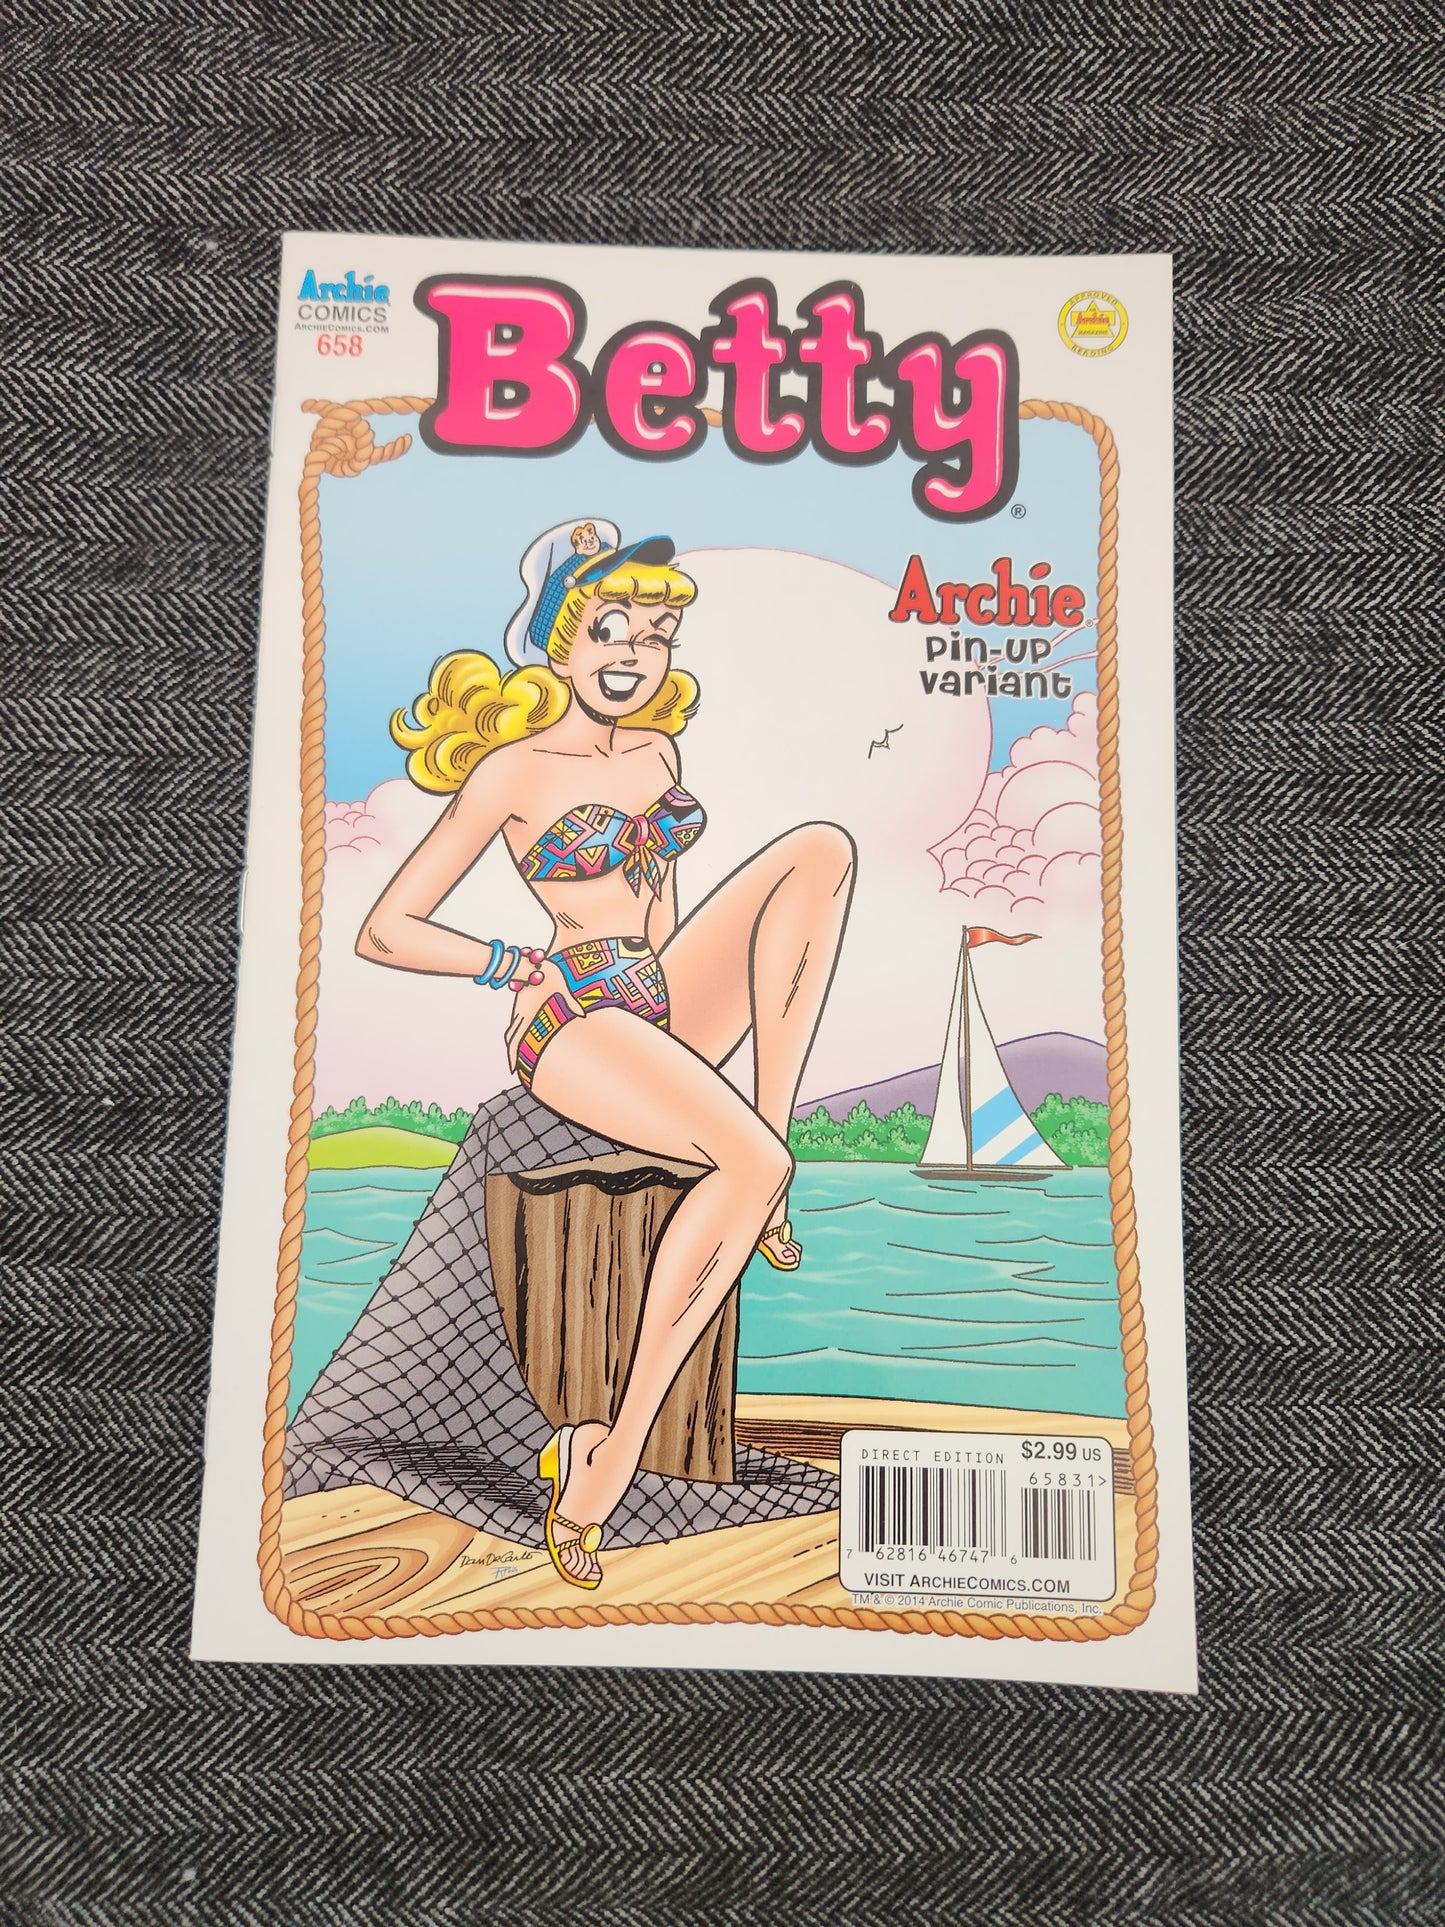 2014 Archie Comics #658 - Betty Pin-Up Variant - VF high grade